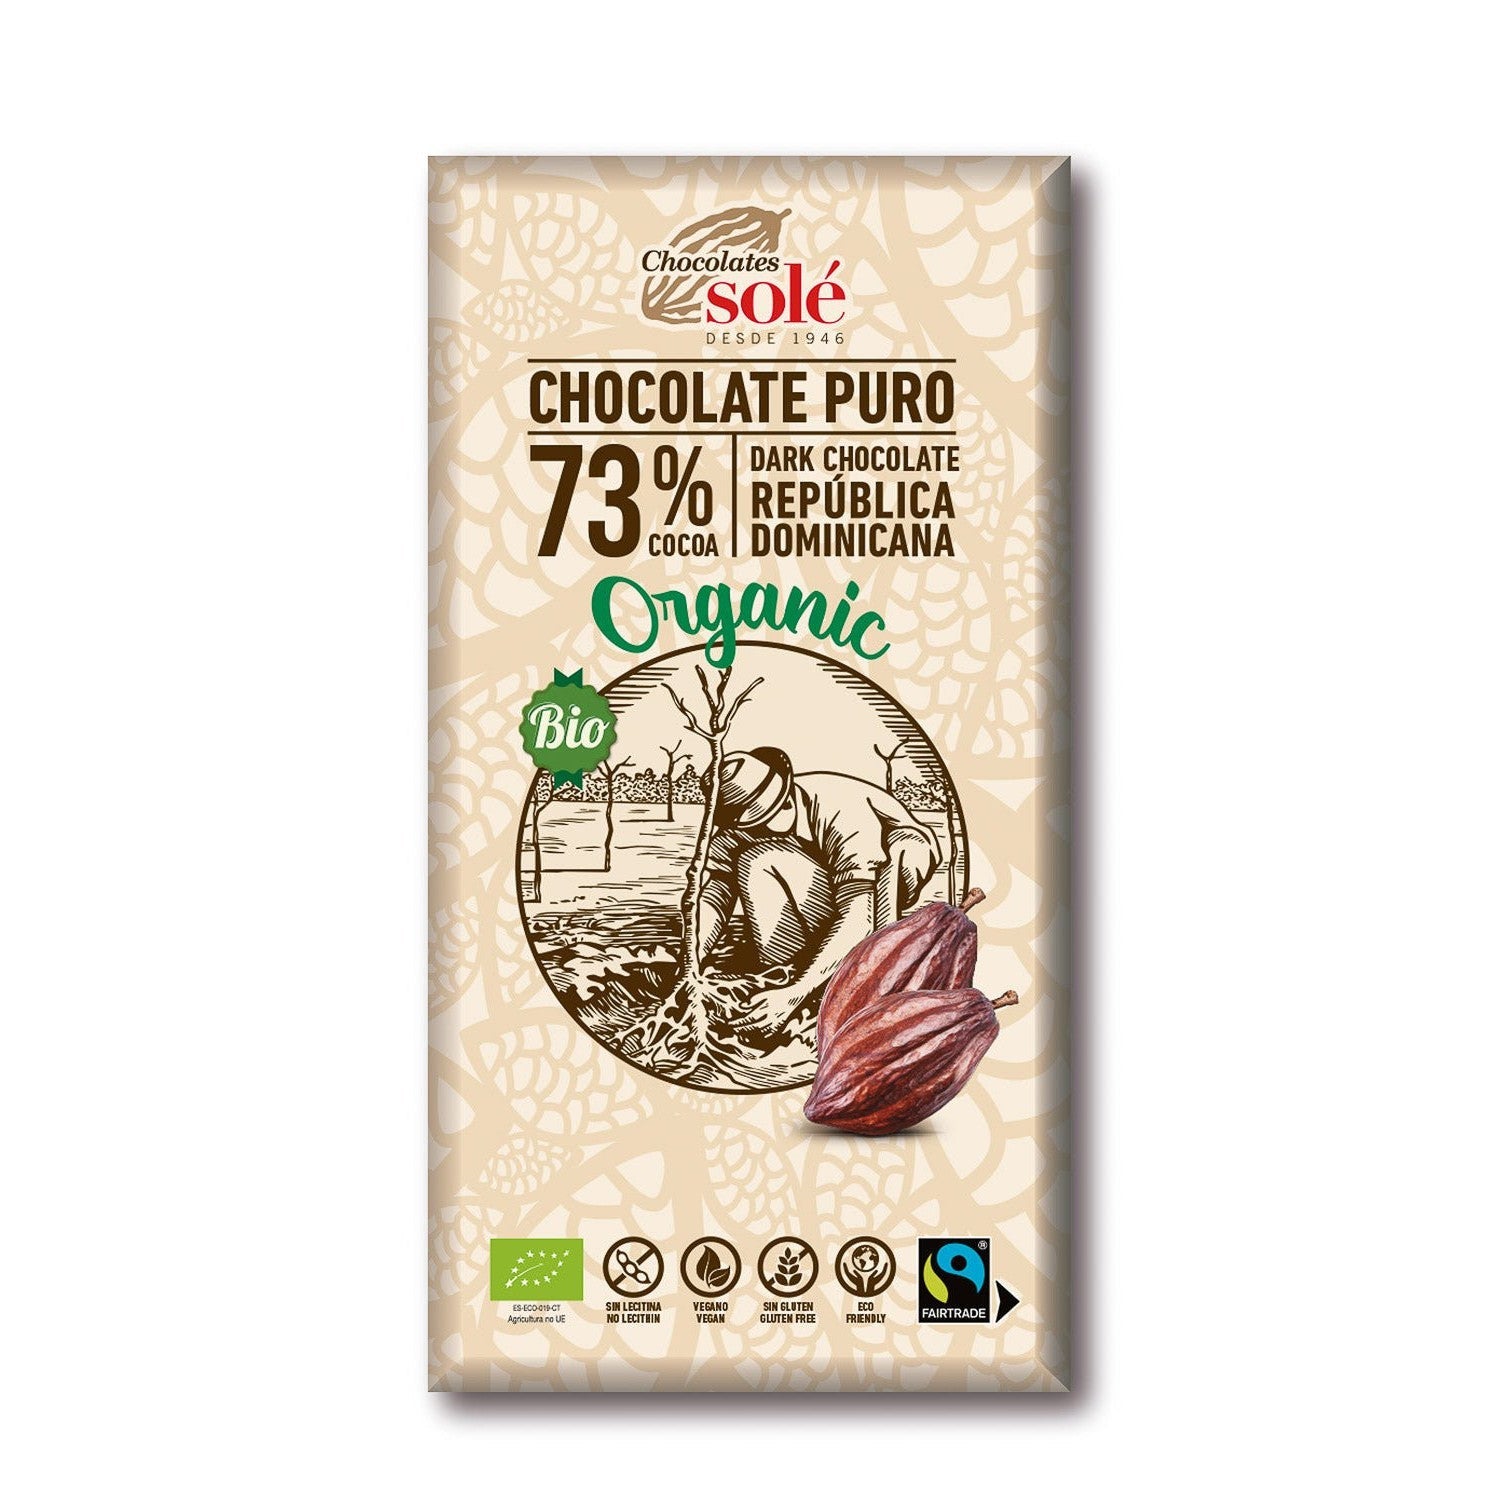 Organic Schokolade 73% (100g) - Gourmet Markt - Chocolates Sole